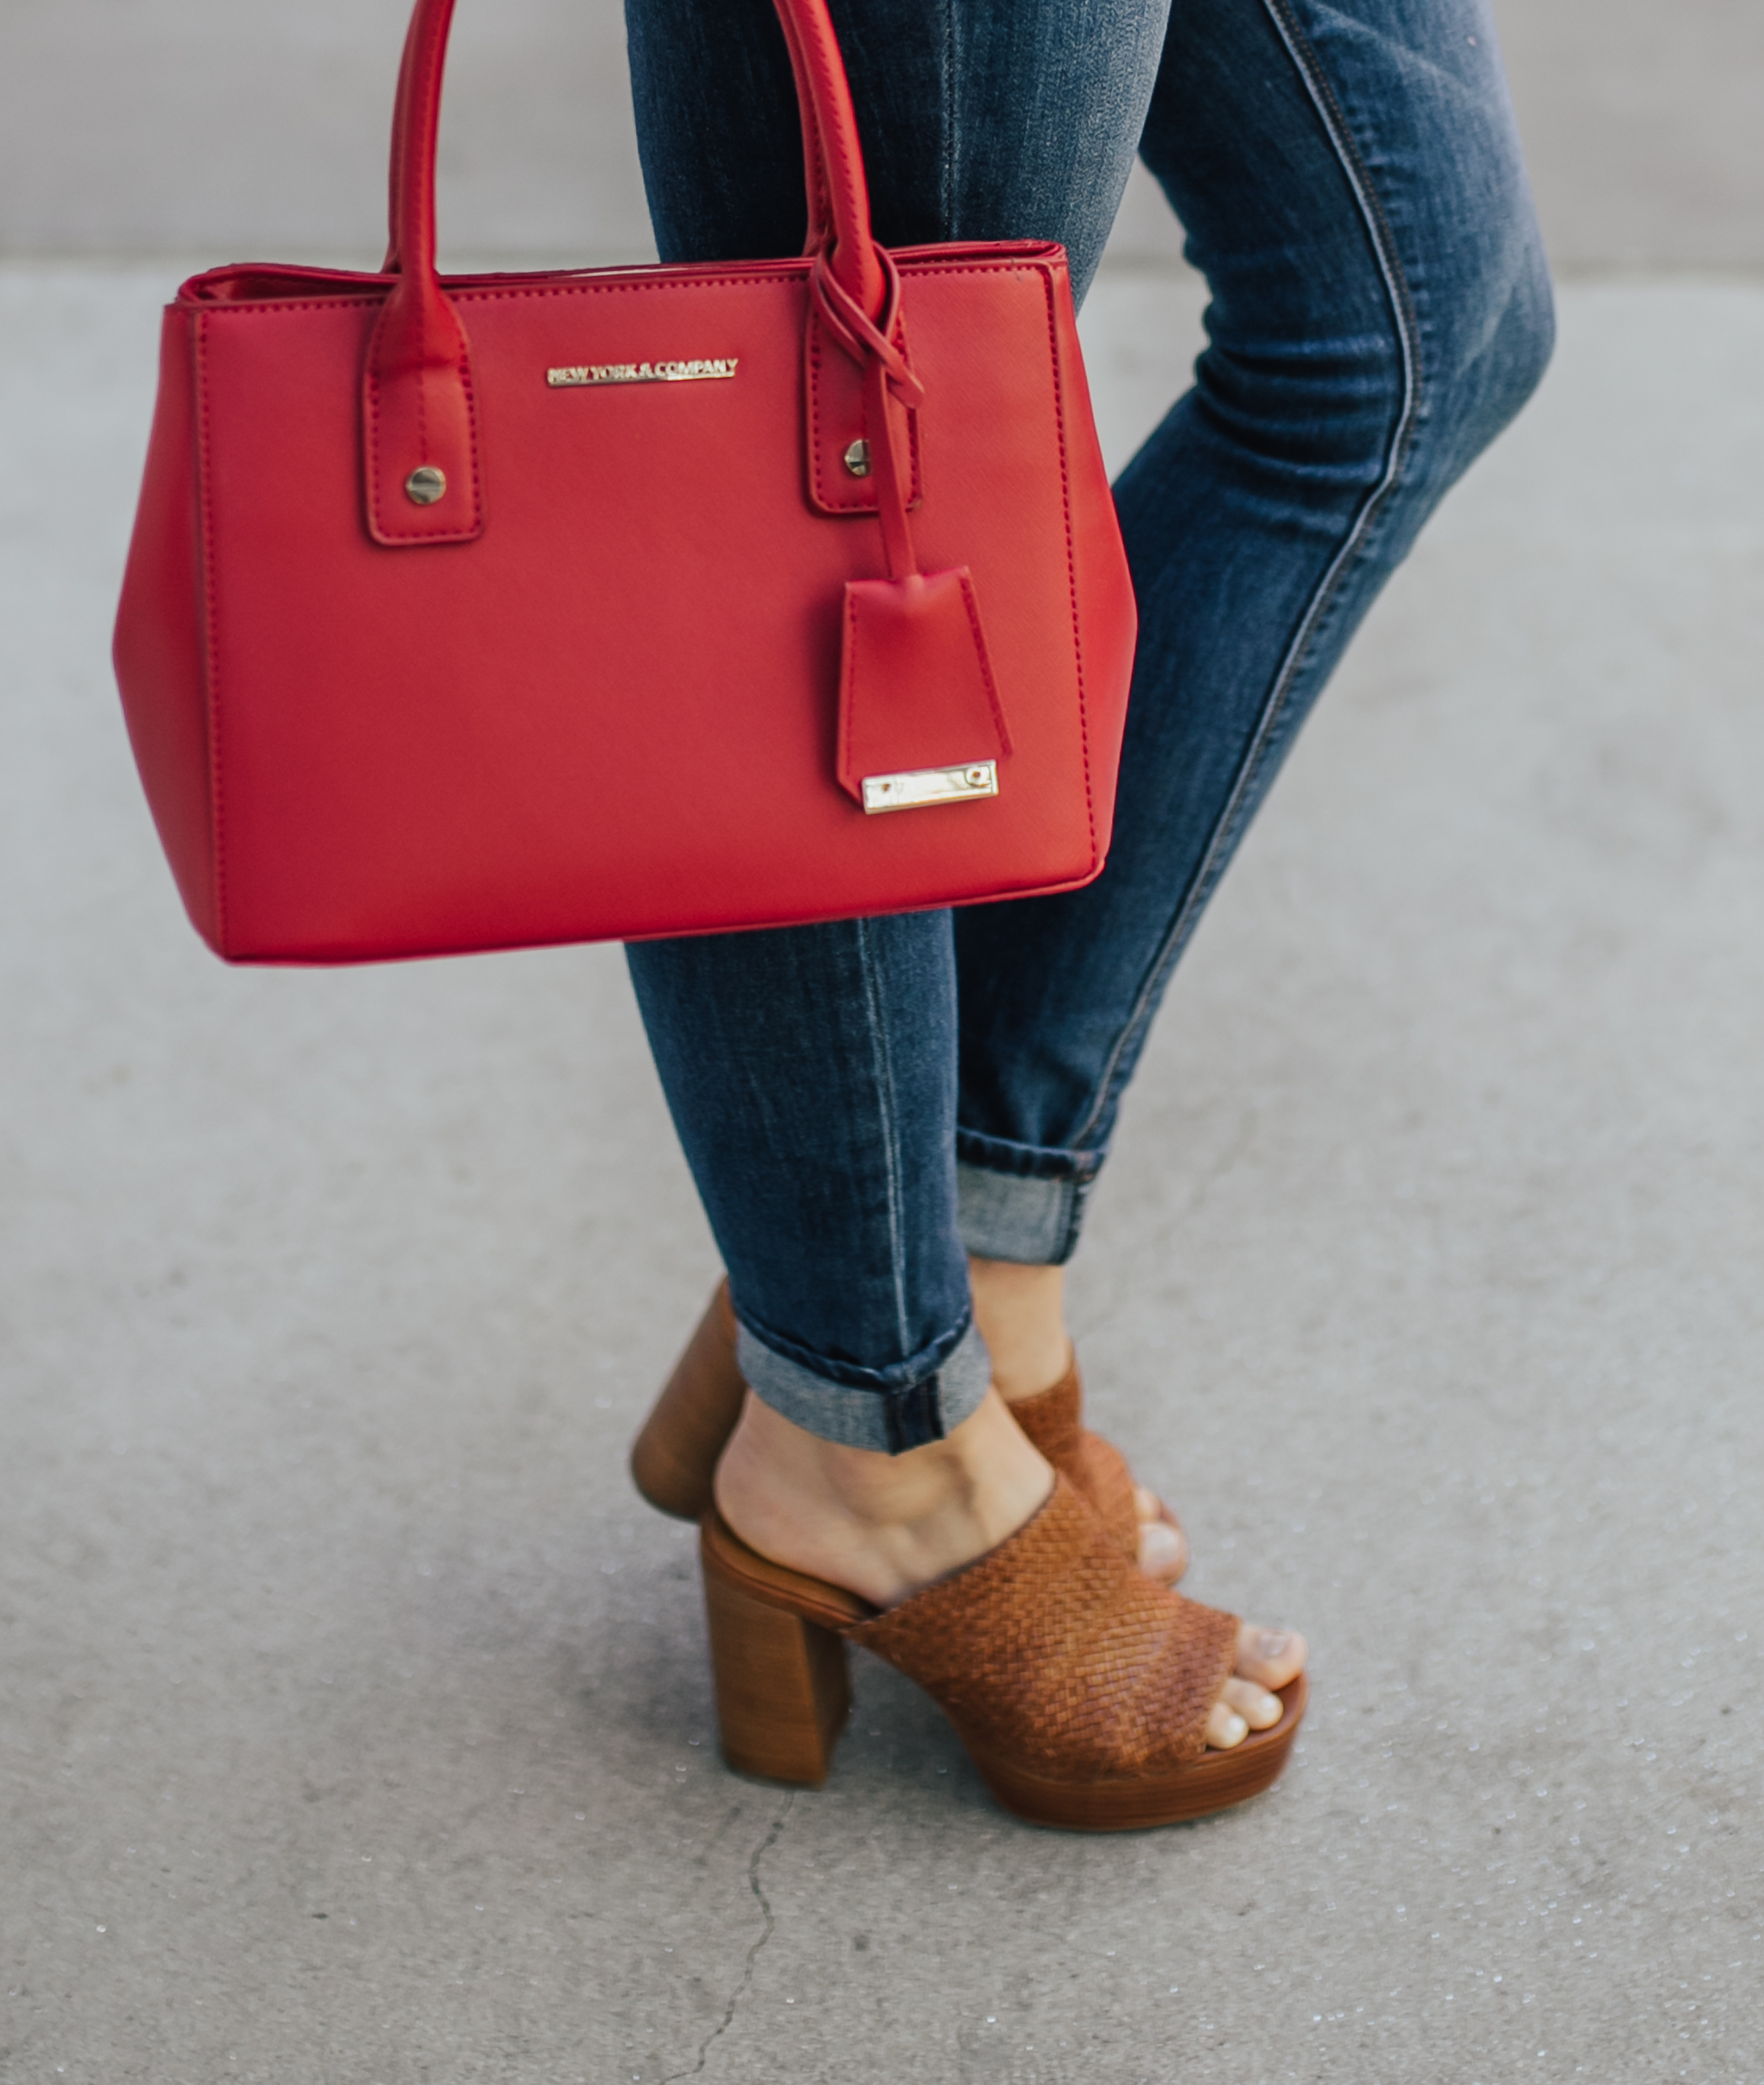 livvyland-blog-olivia-watson-new-york-and-company-striped-chiffon-top-red-handbag-austin-texas-fashion-blogger-6